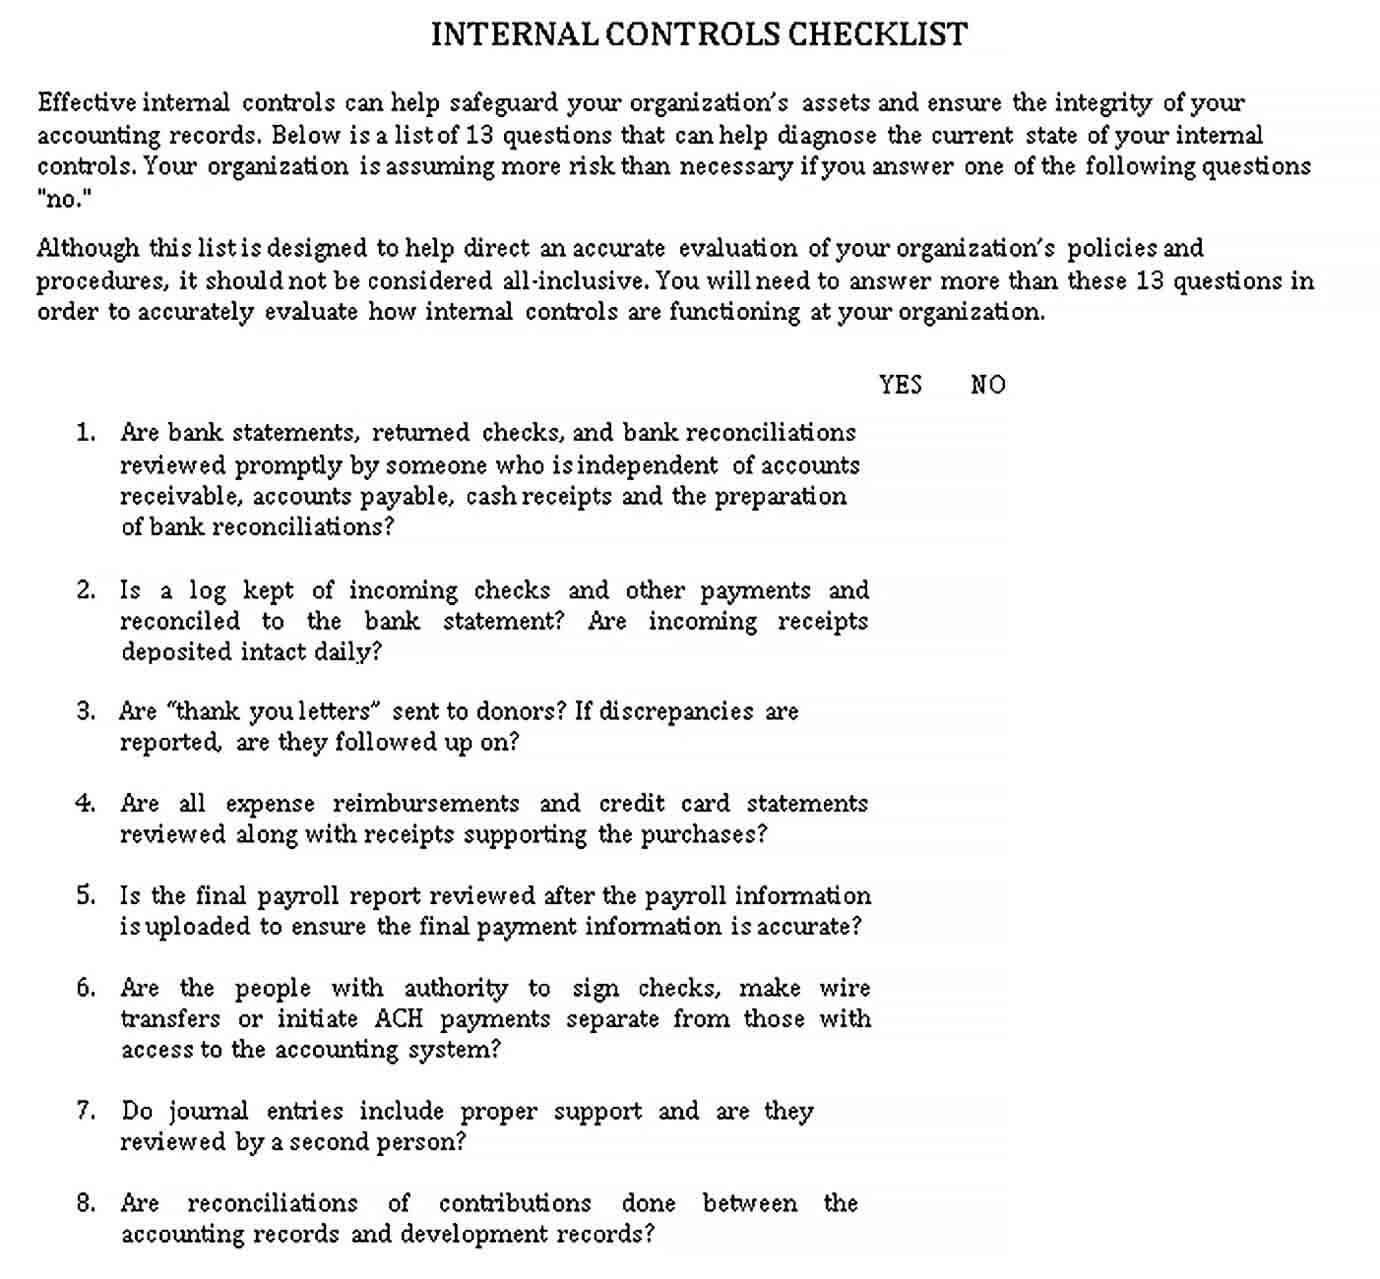 Sample Internal Control Checklist Template For Organization